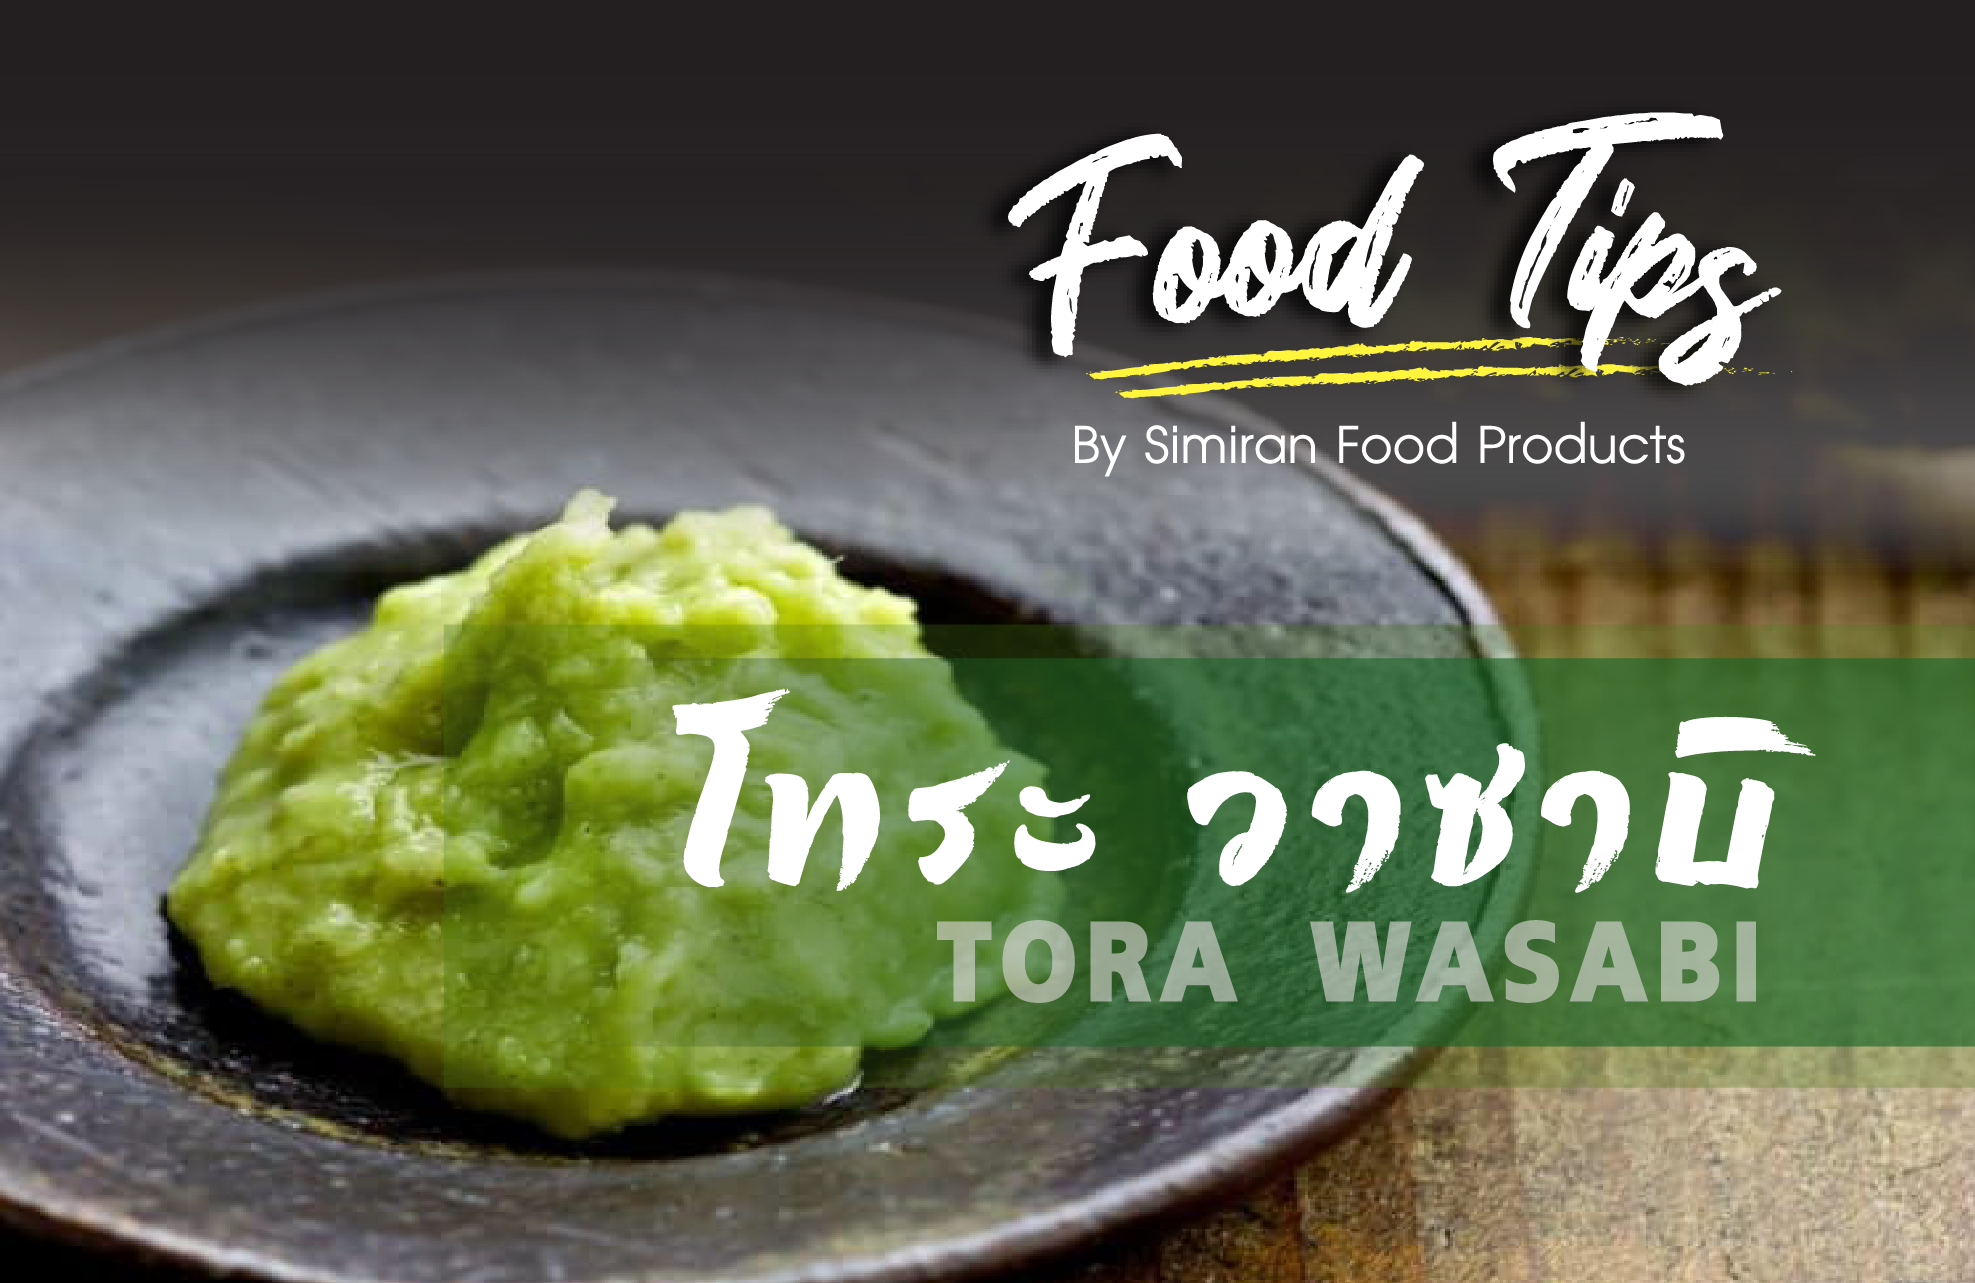 Food Tips -TORA WASABI - โทระ วาซาบิ